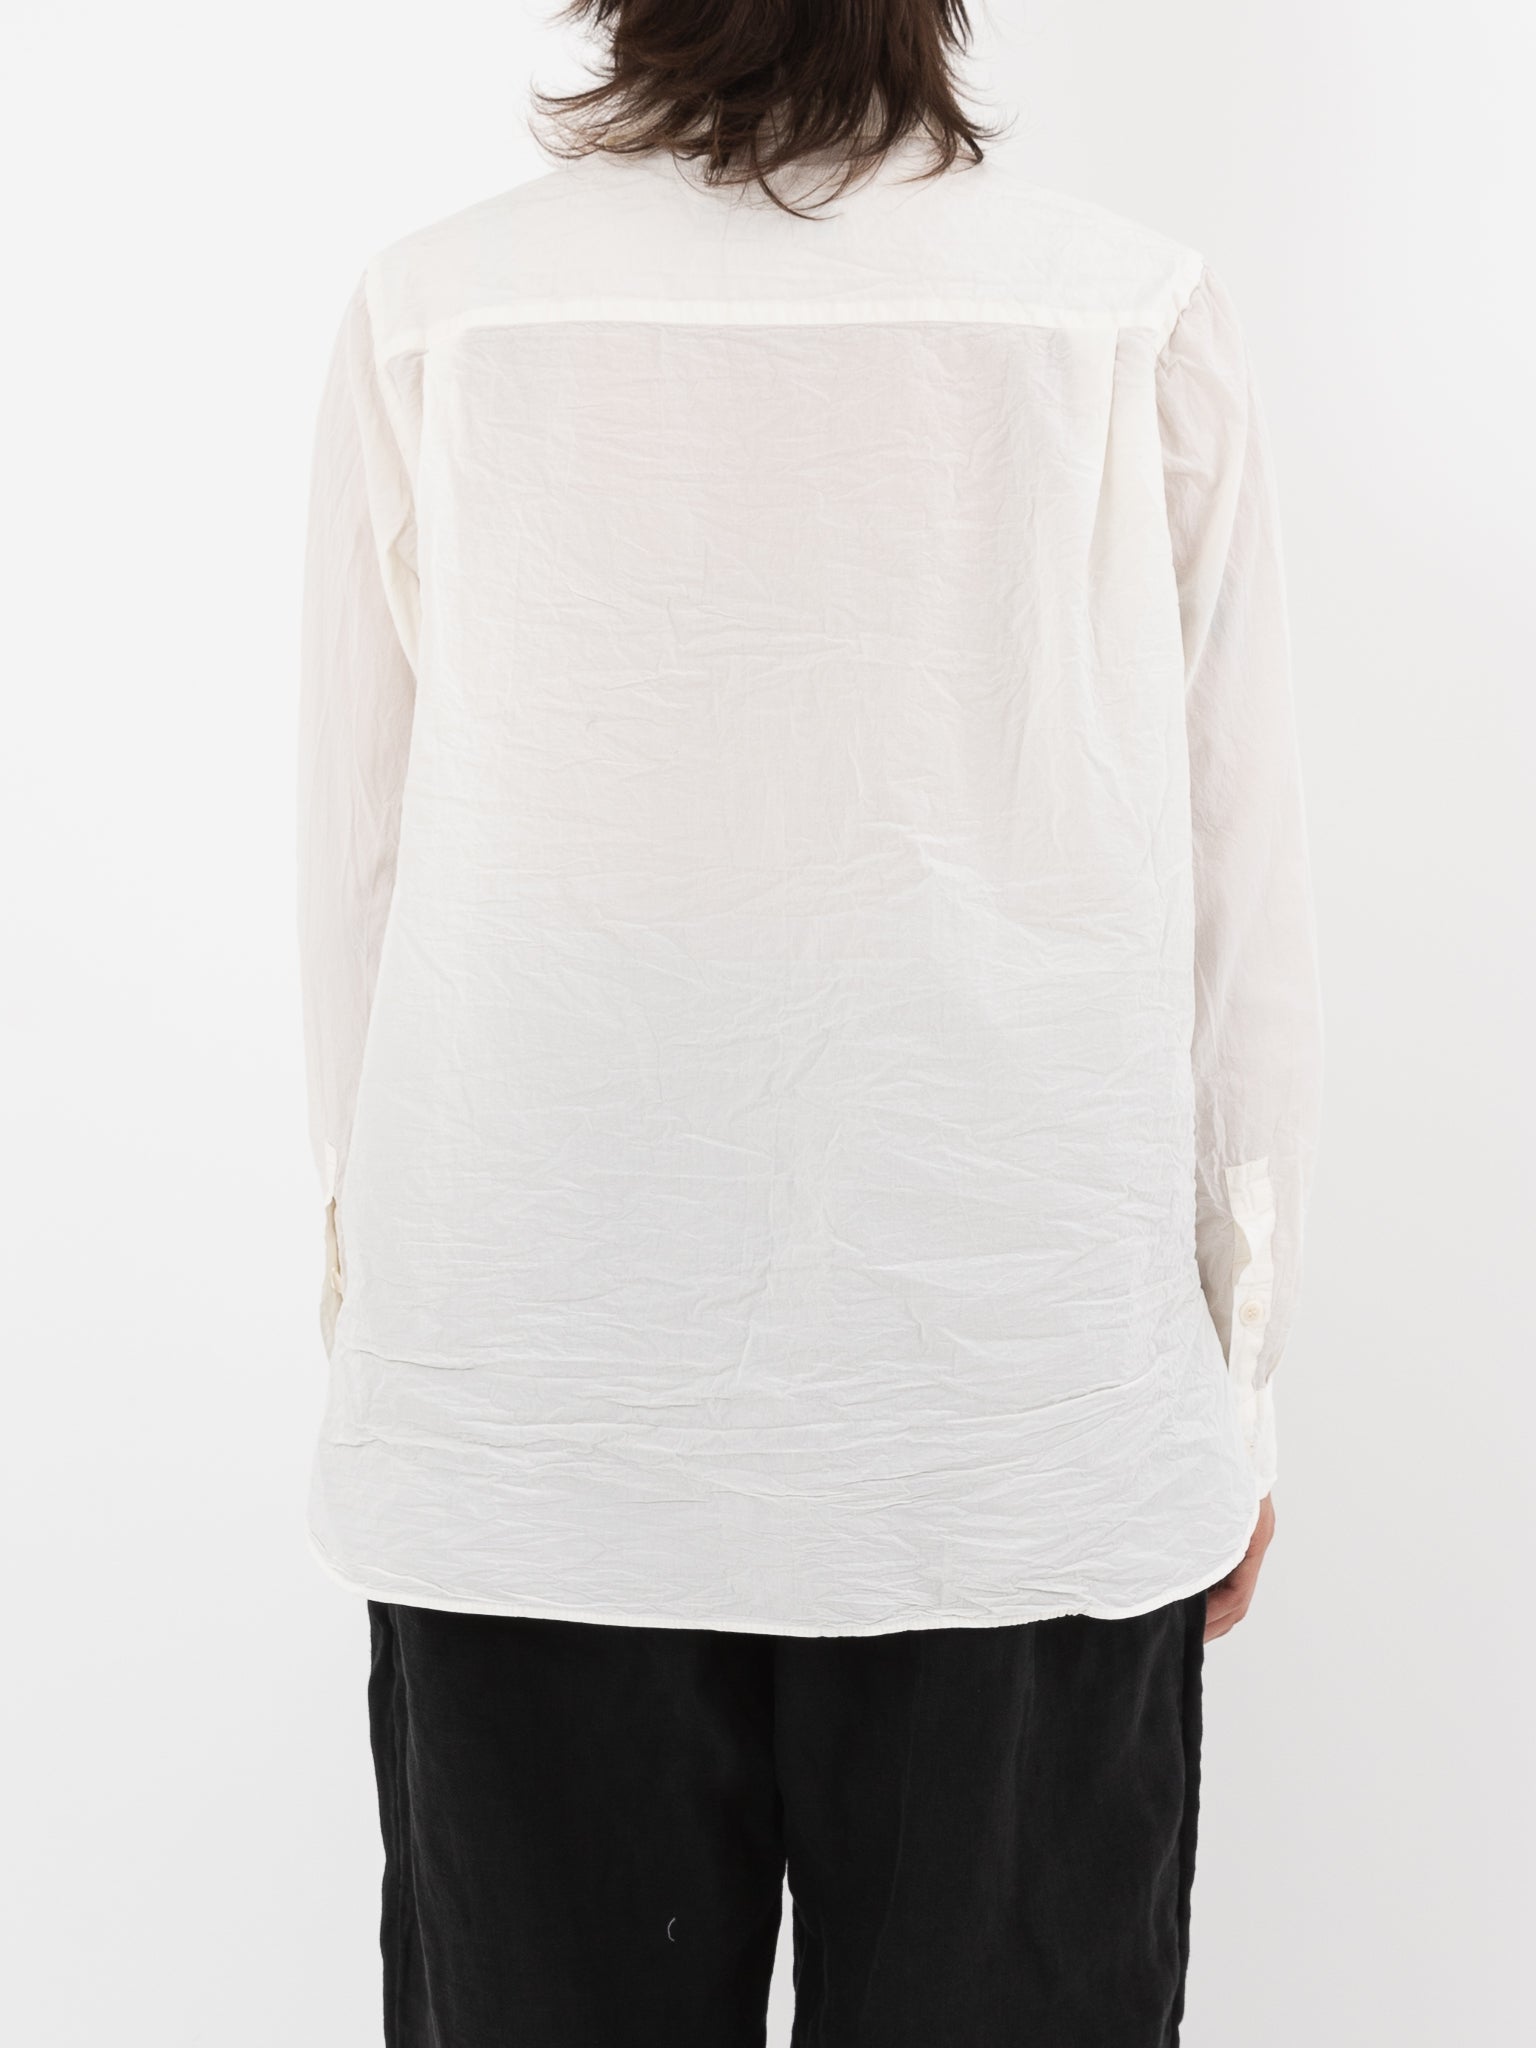 Casey Casey Marie Shirt, White - Worthwhile, Inc.